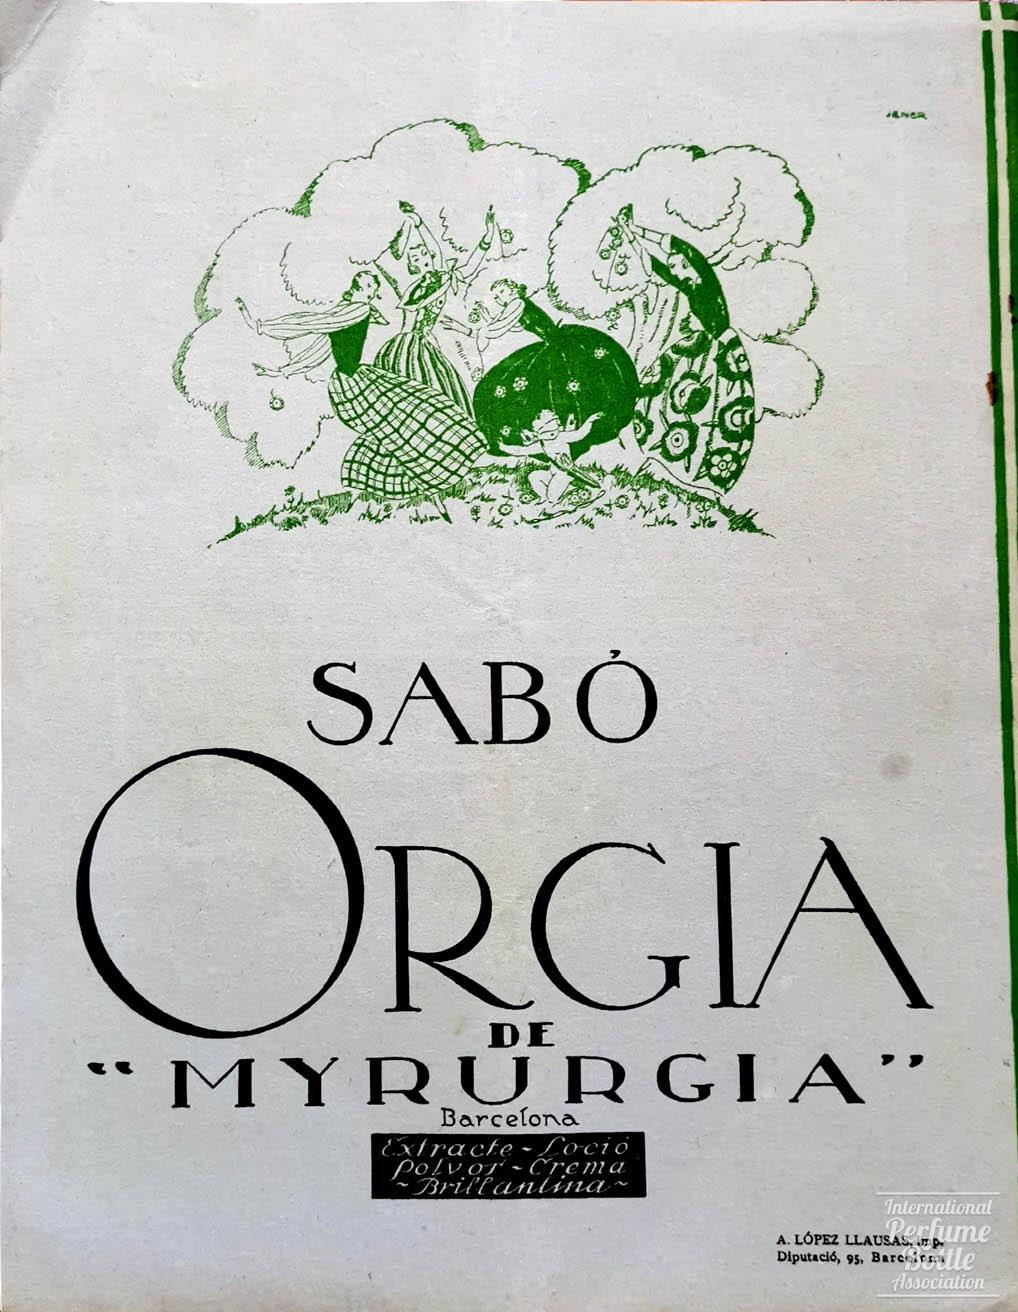 "Orgia" Soap by Myrurgia Advertisement - 1928